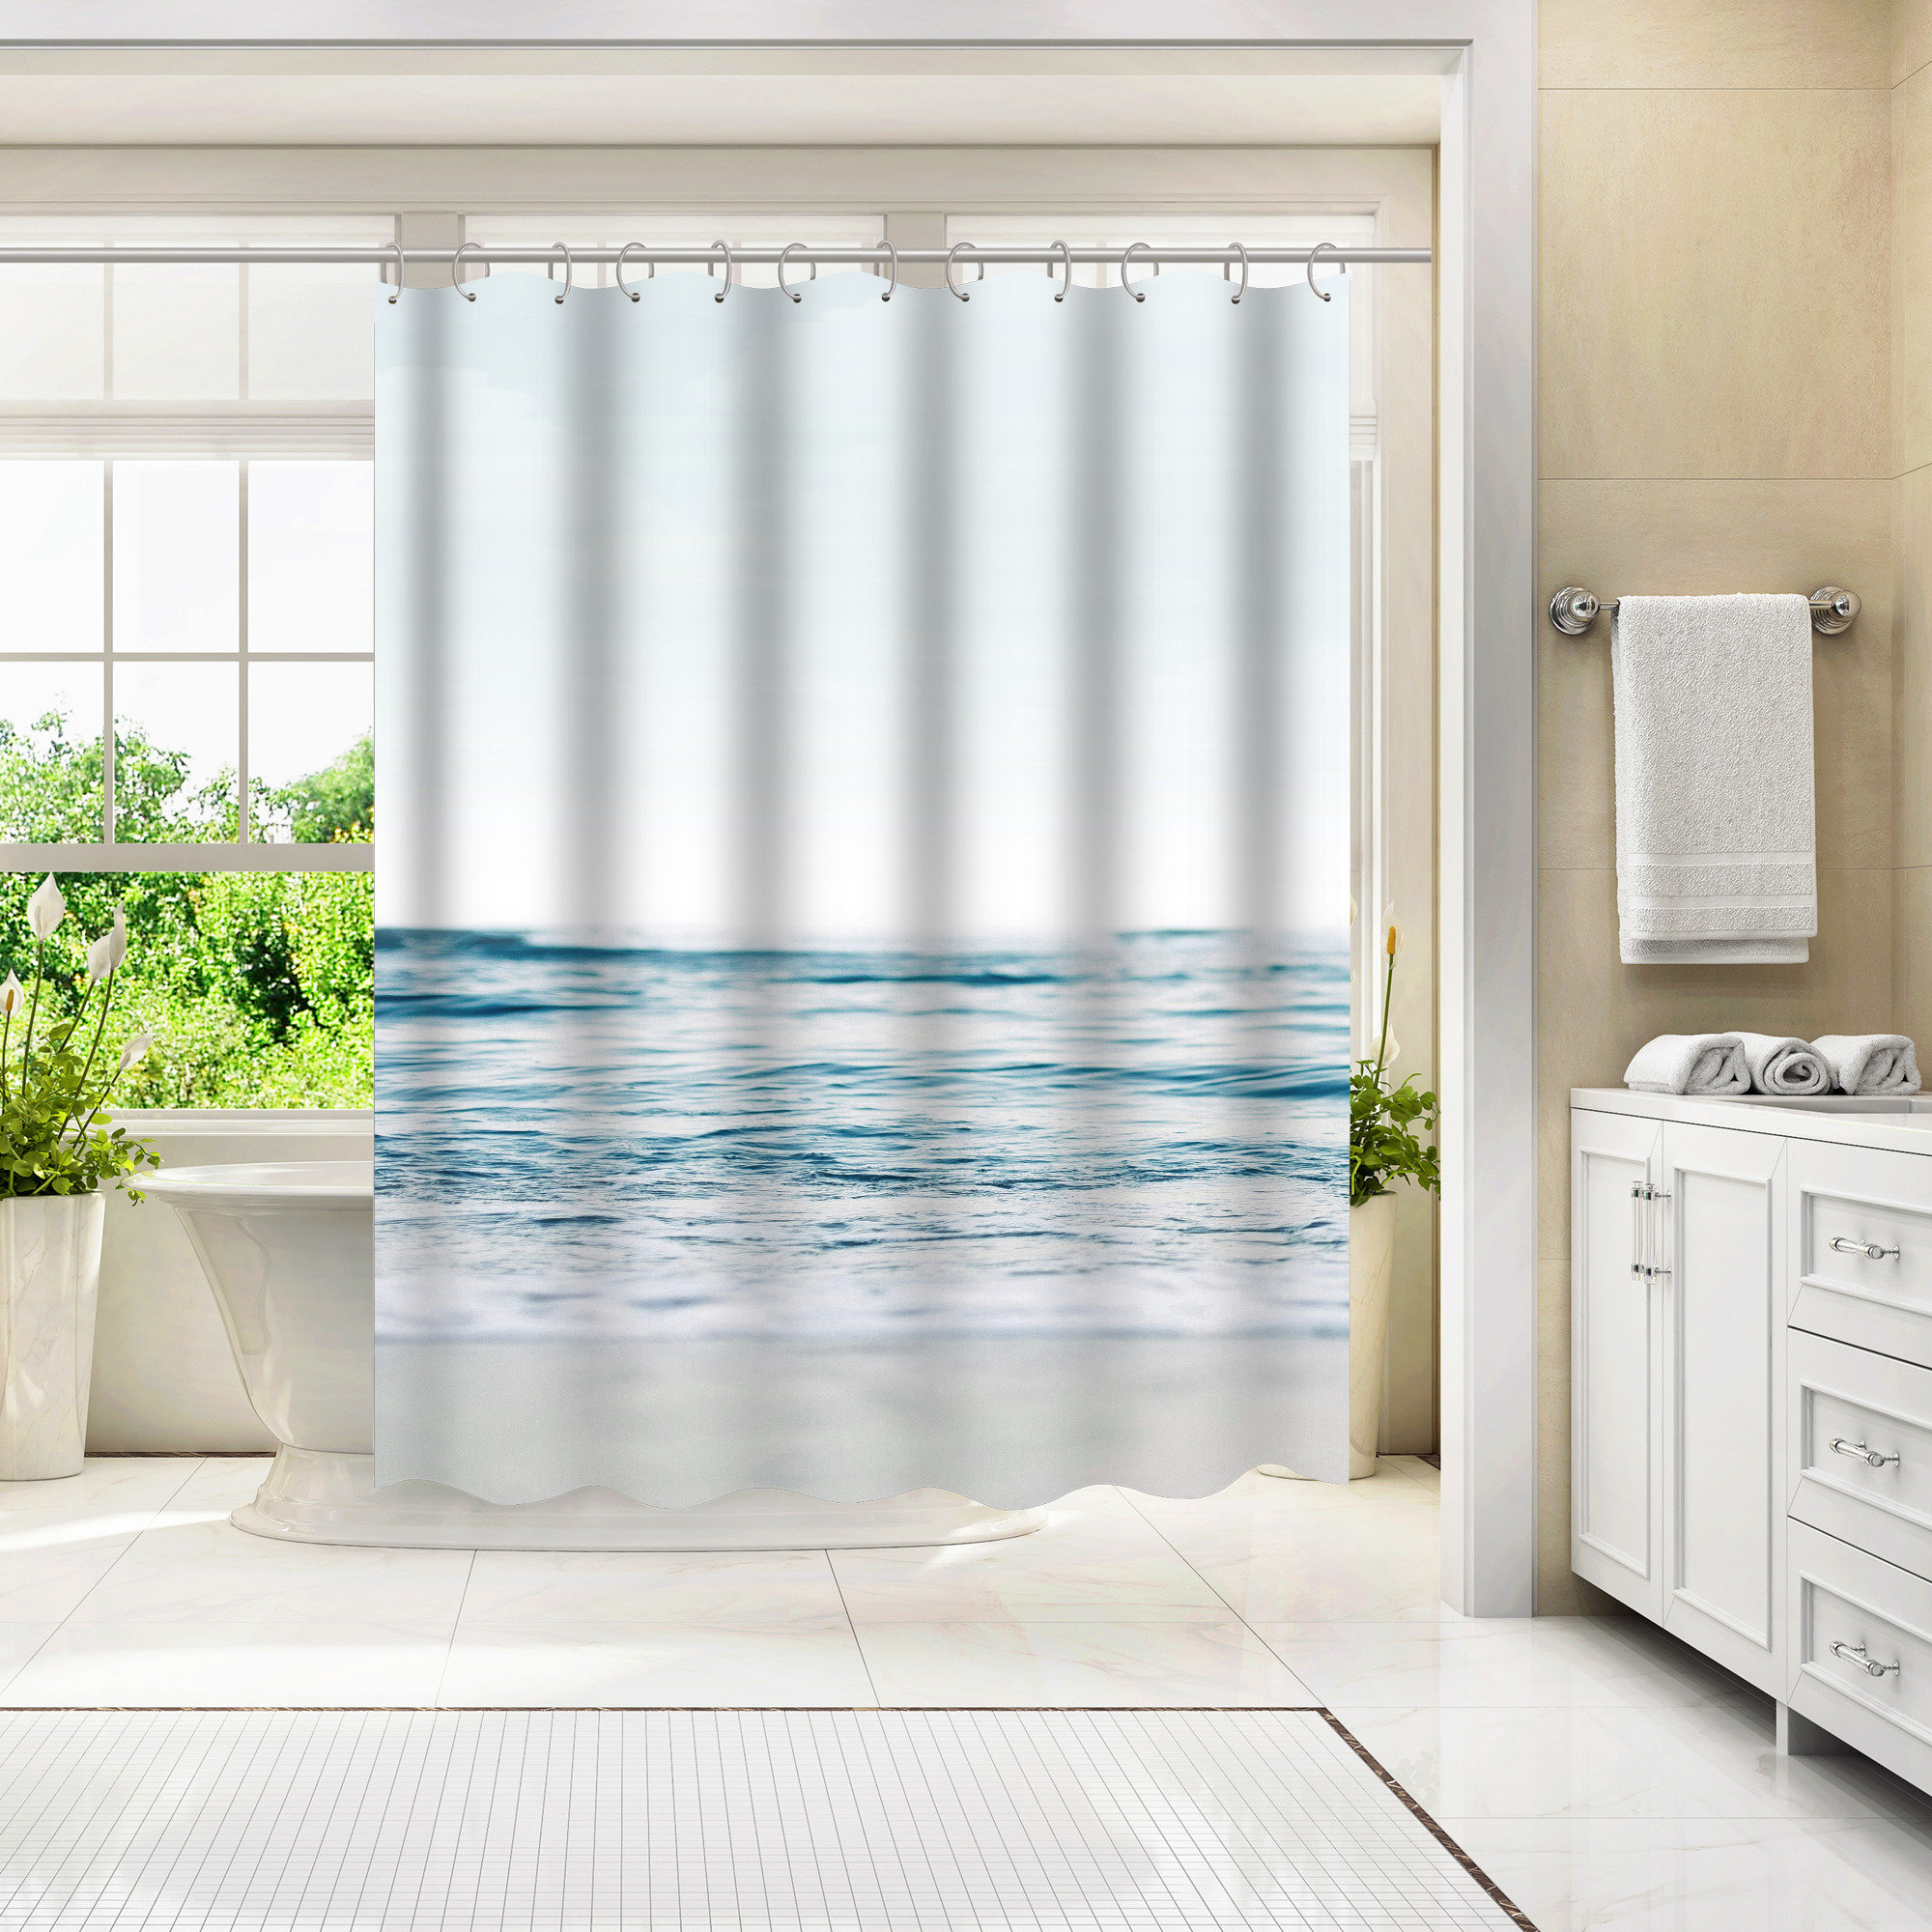 Bless international 71 x 74 Coastal Shower Curtain , Blue Wave and Sand 1  by Artvir